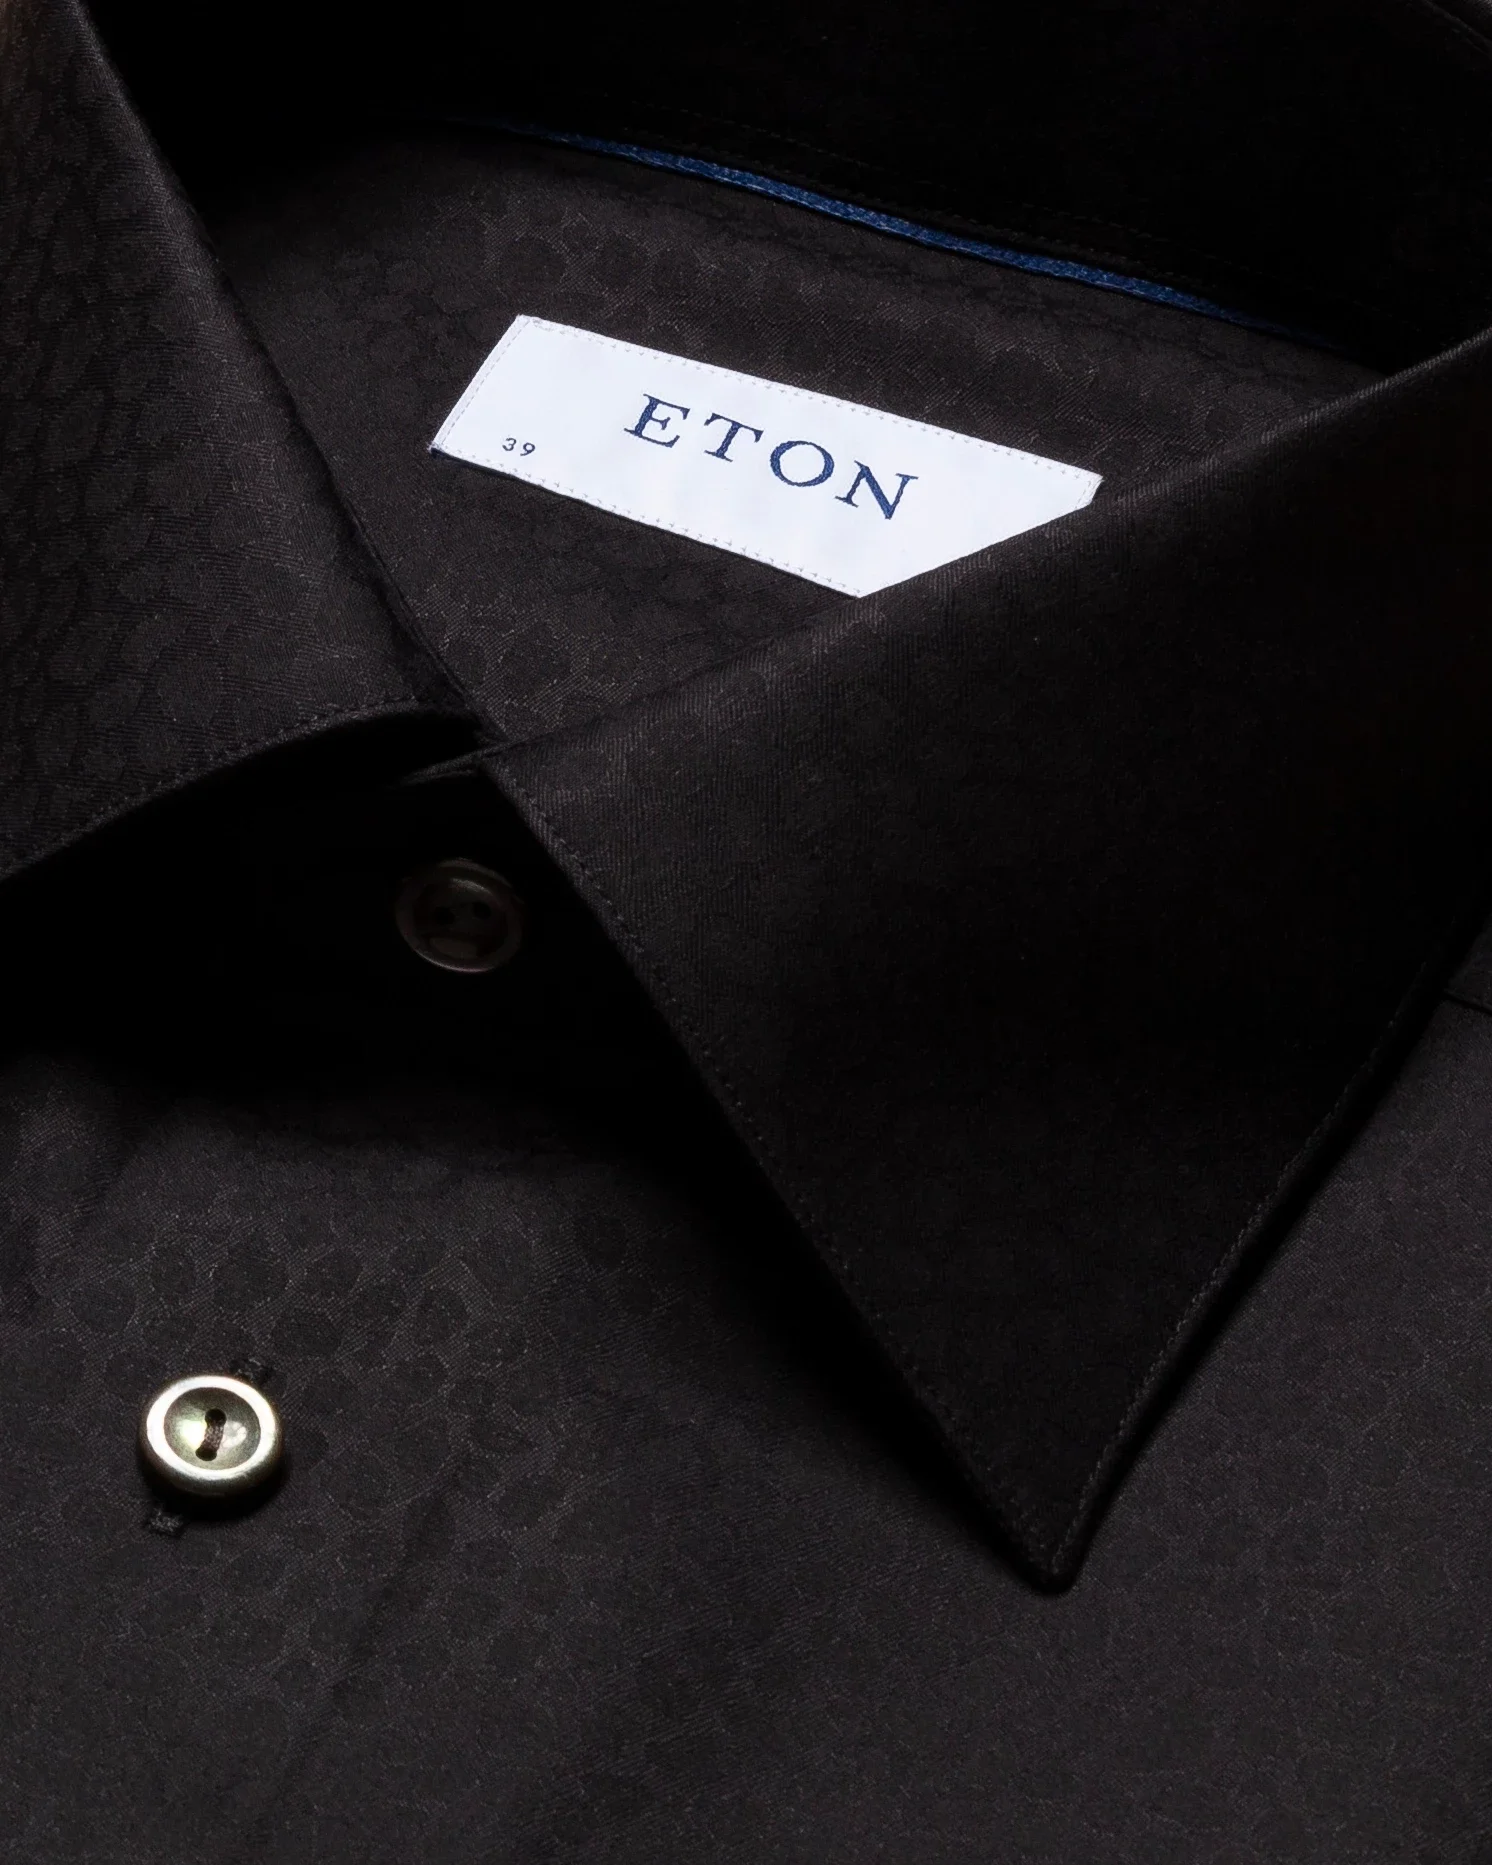 Eton - black leo jacquard shirt moderate cut away